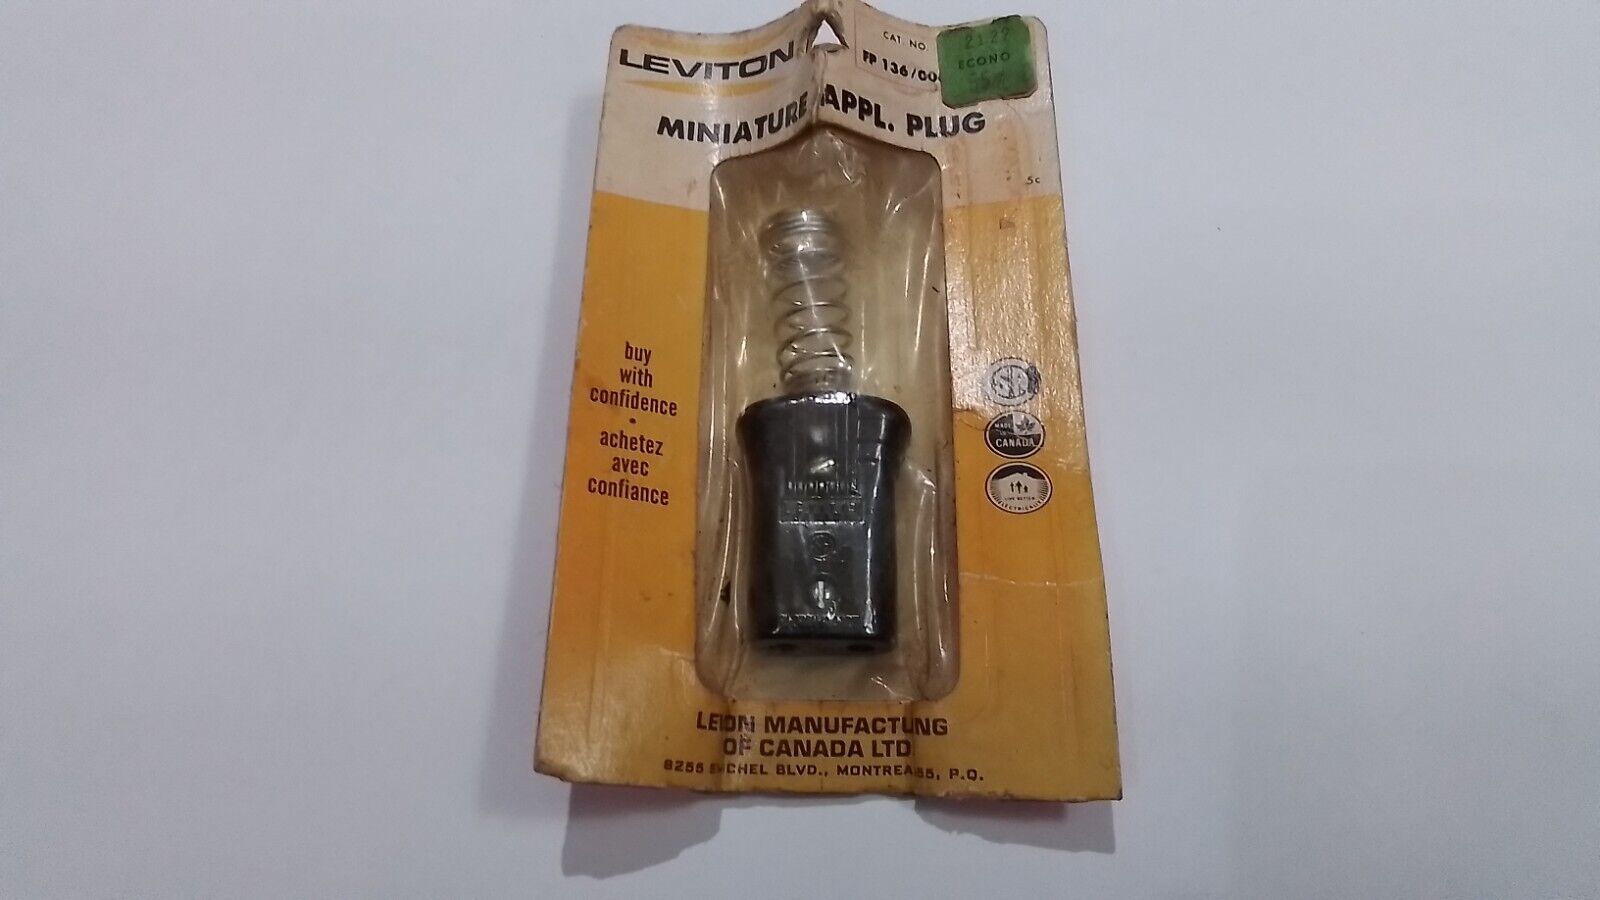 Vintage Appliance Plug Leviton Miniature 136 006 Female End New Power Supply